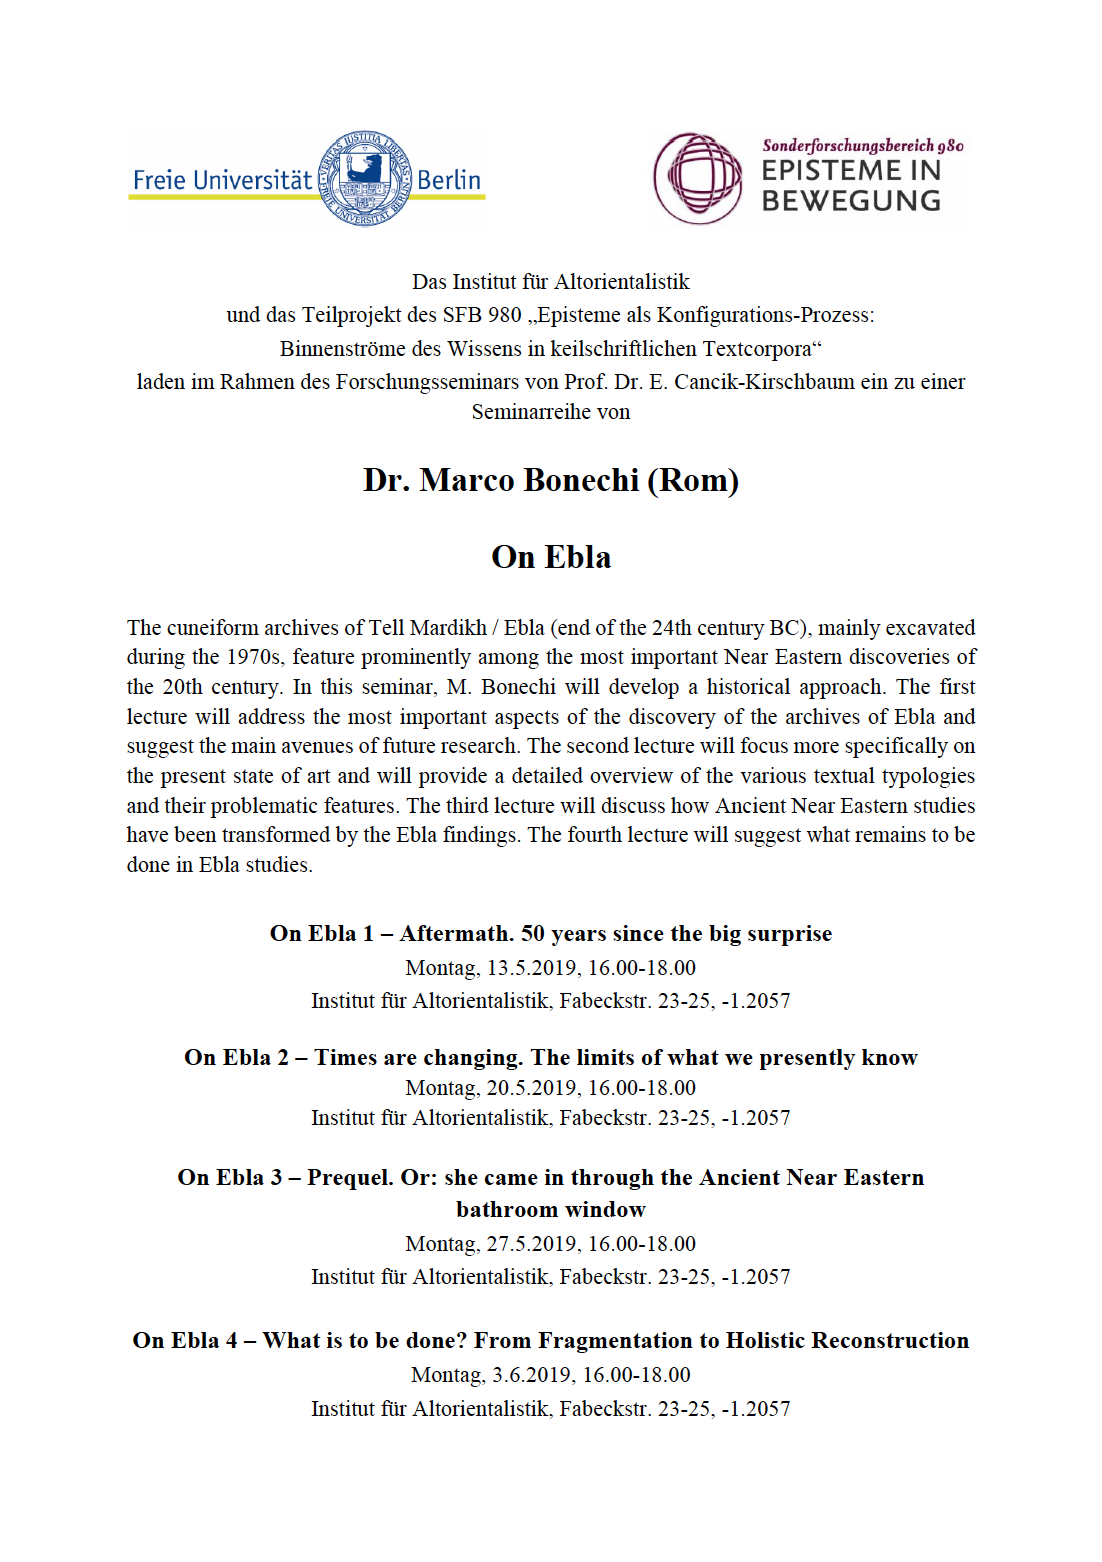 Dr. Marco Bonechi – "On Ebla"